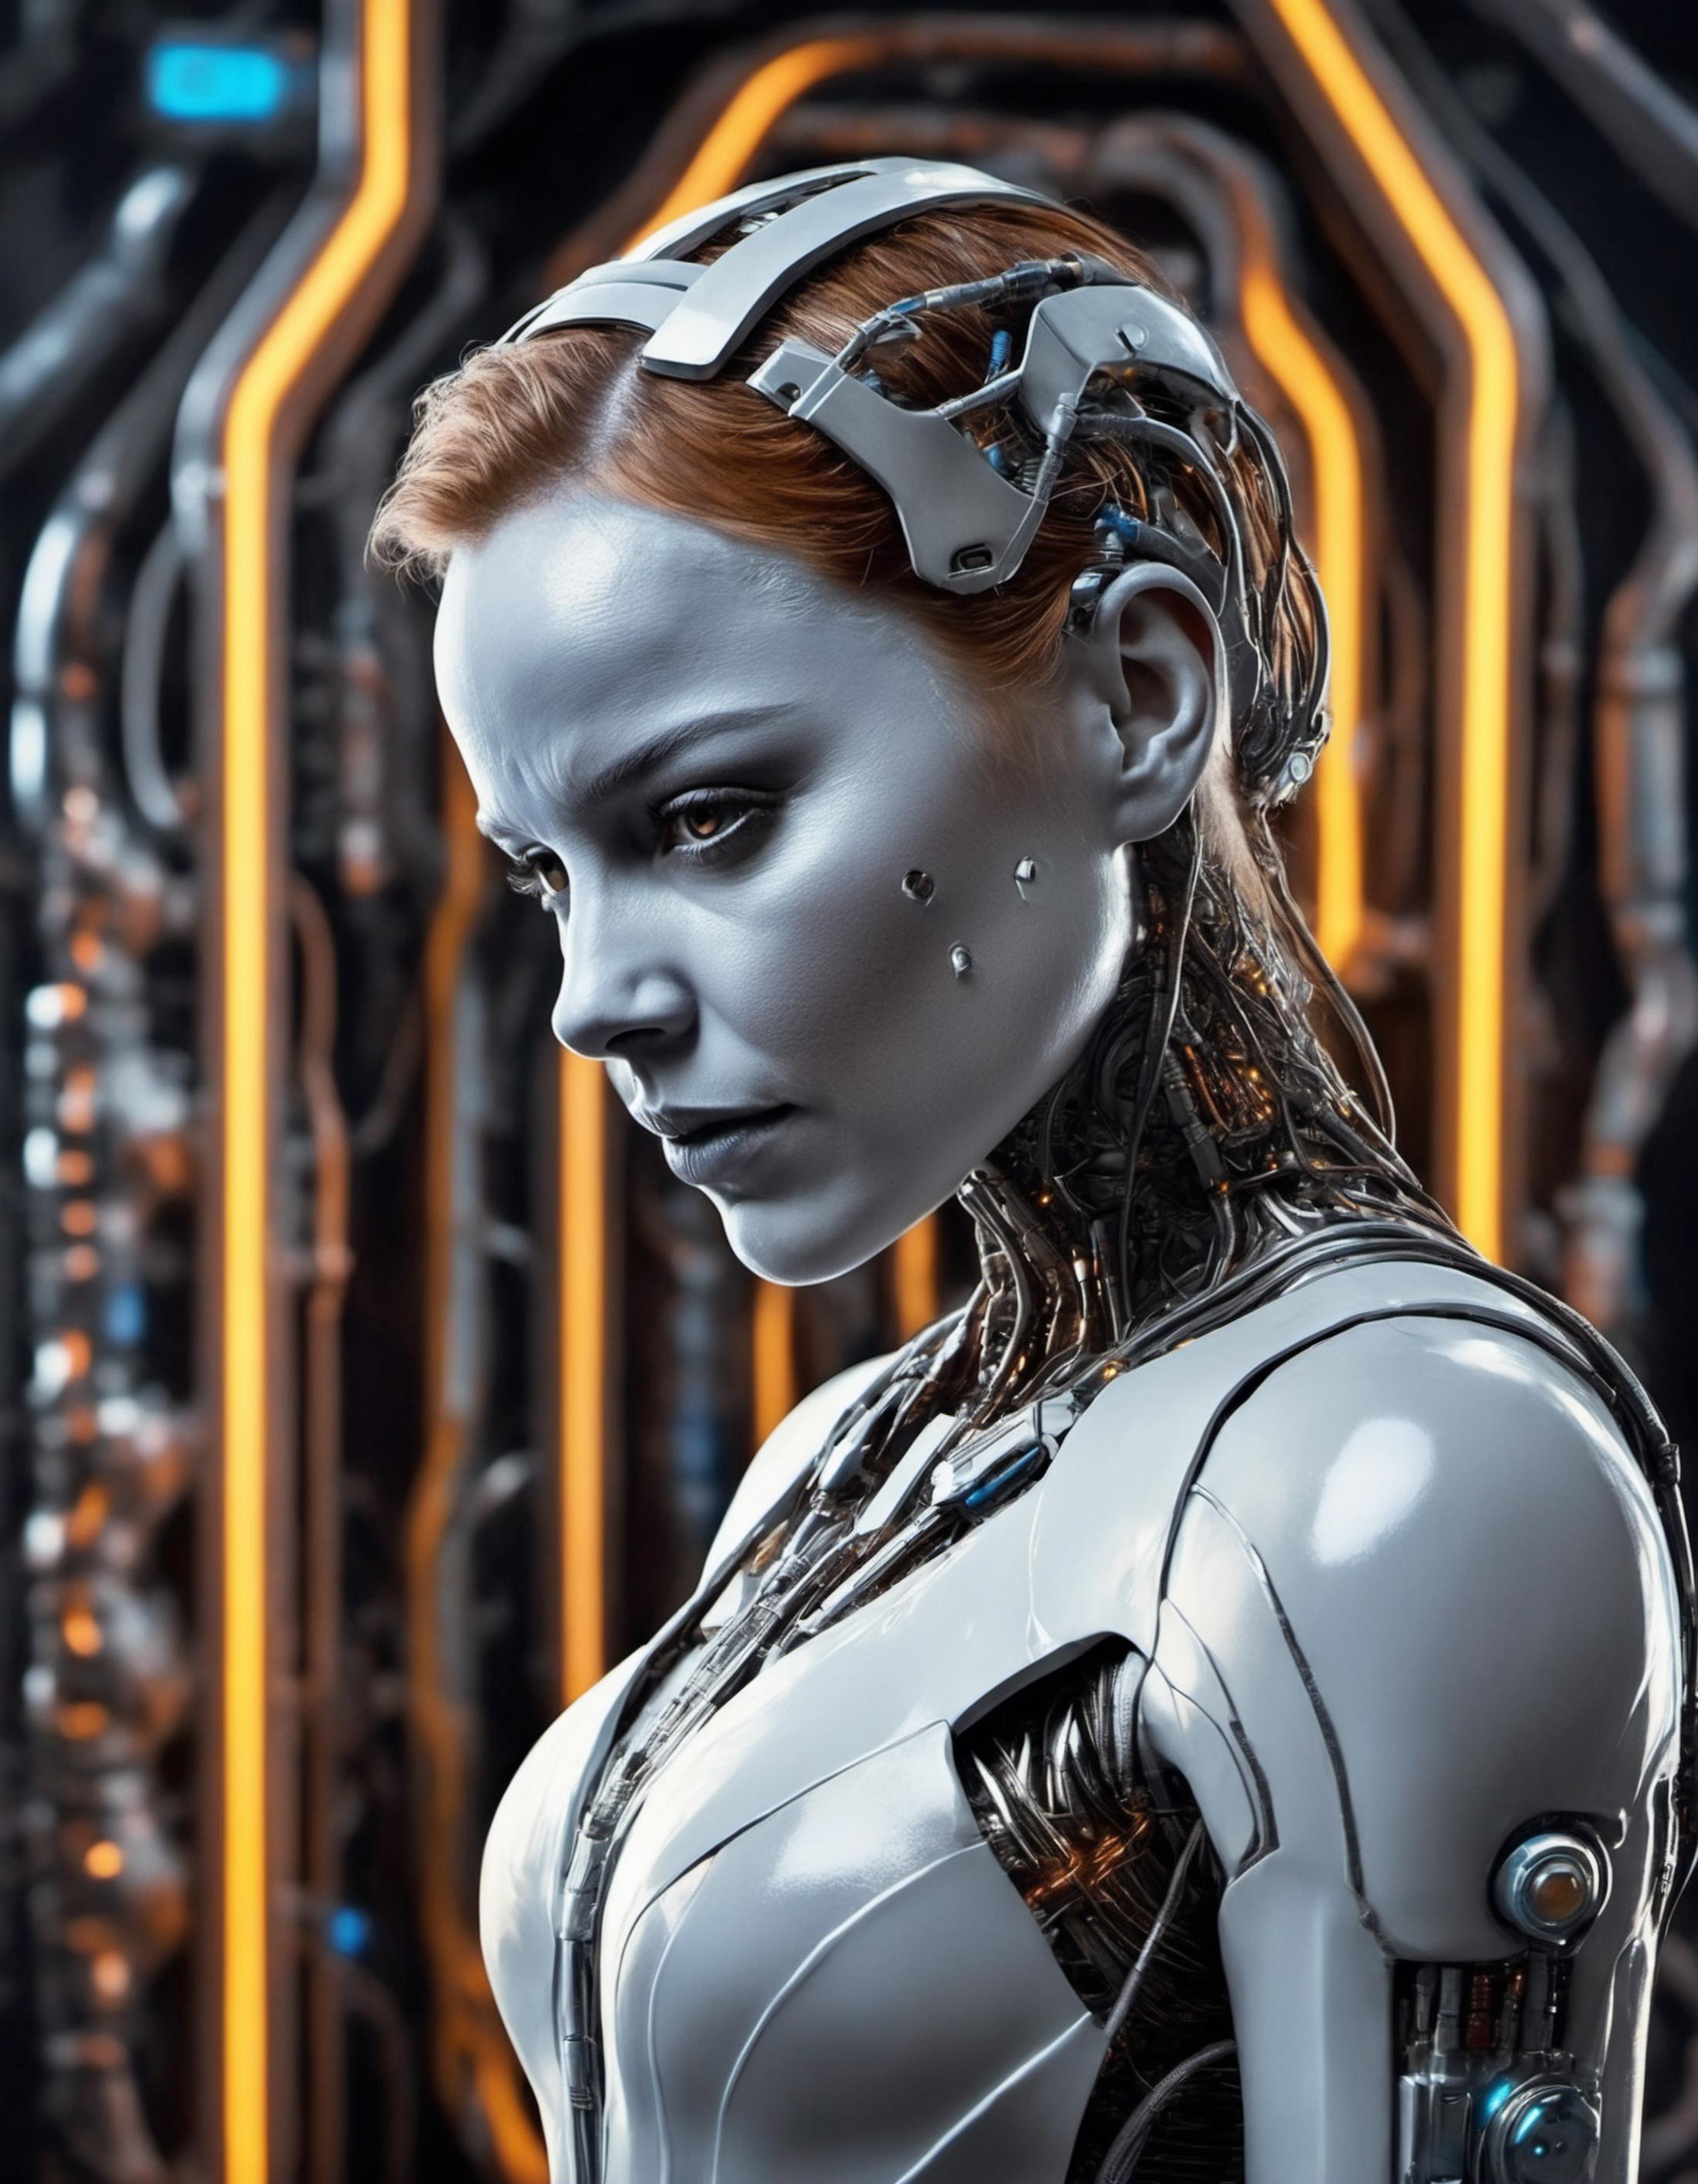 AI model image by Zorglub